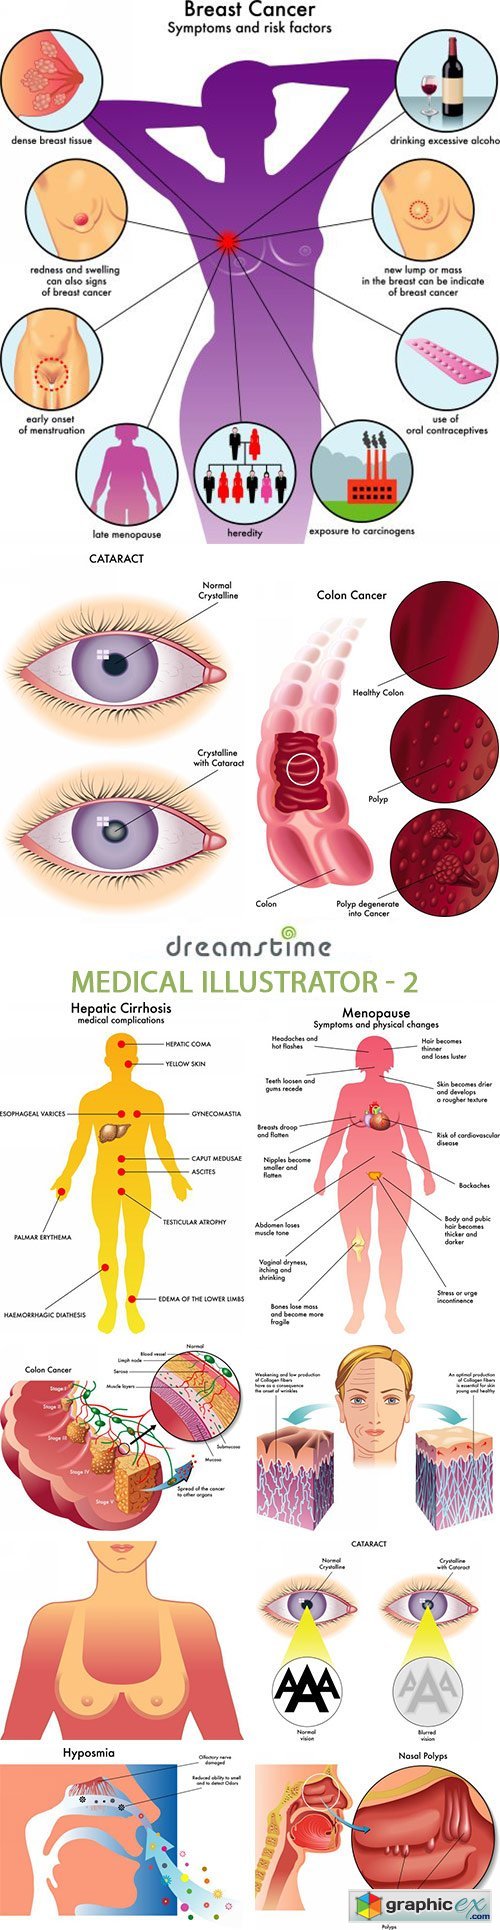 Medical Illustrator - 2 - 25xEPS